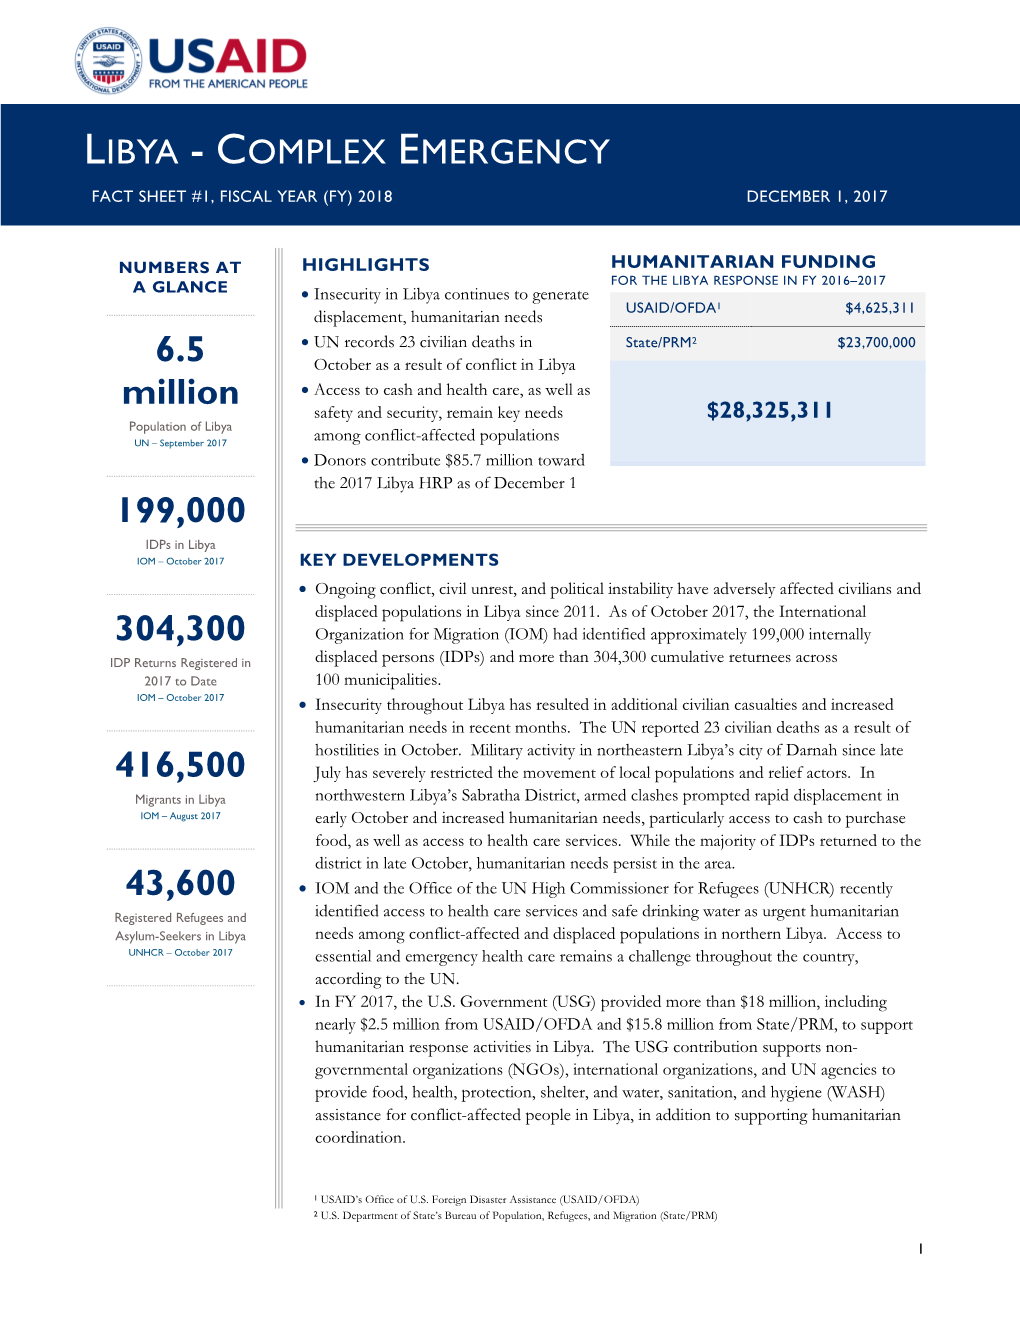 Libya Complex Emergency Fact Sheet #1